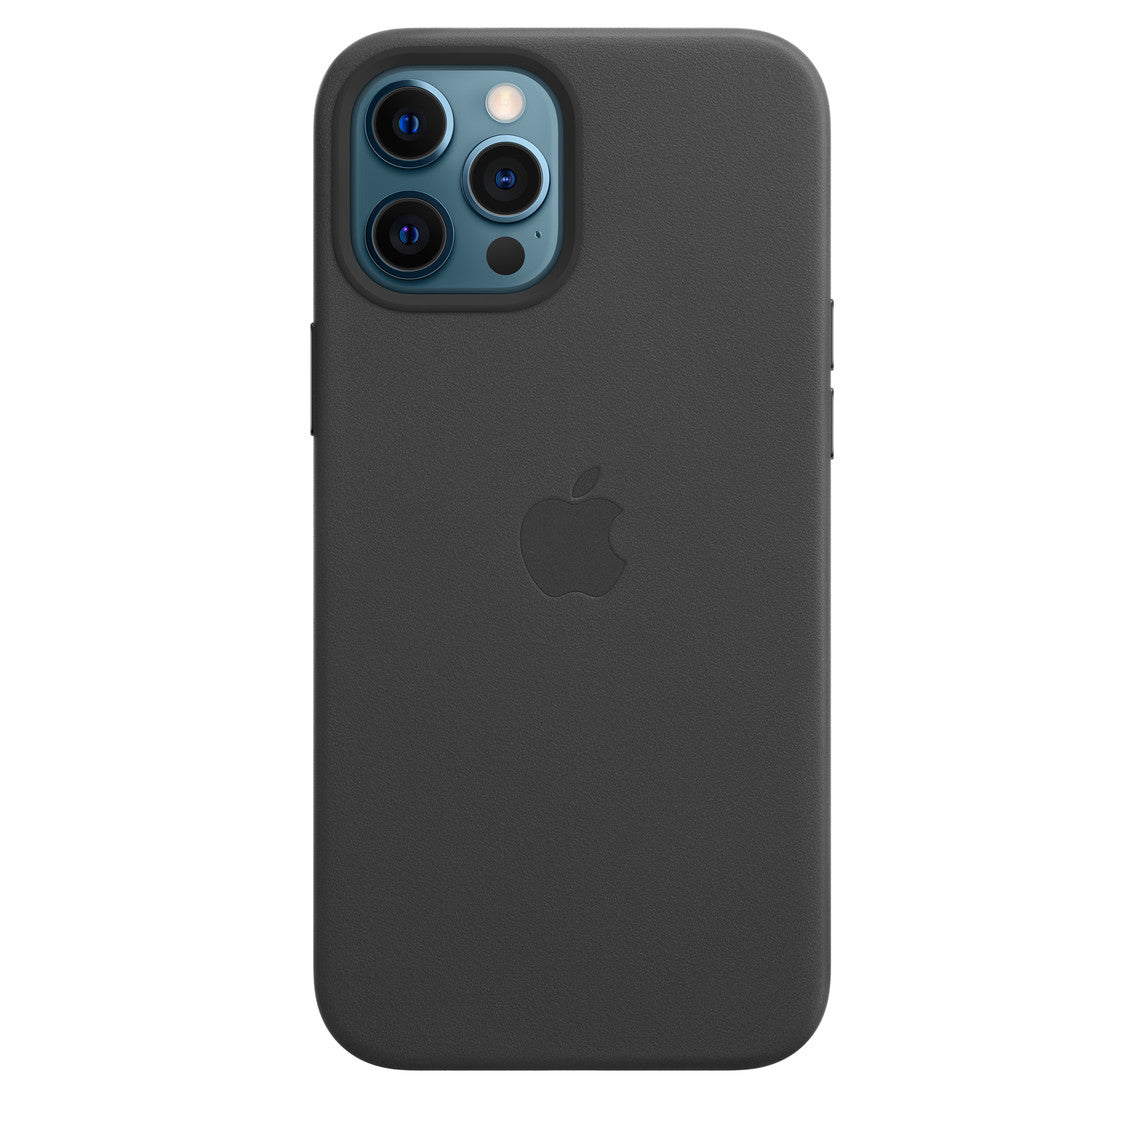 Genuine Apple iPhone 12 Pro Max leather Case - Black